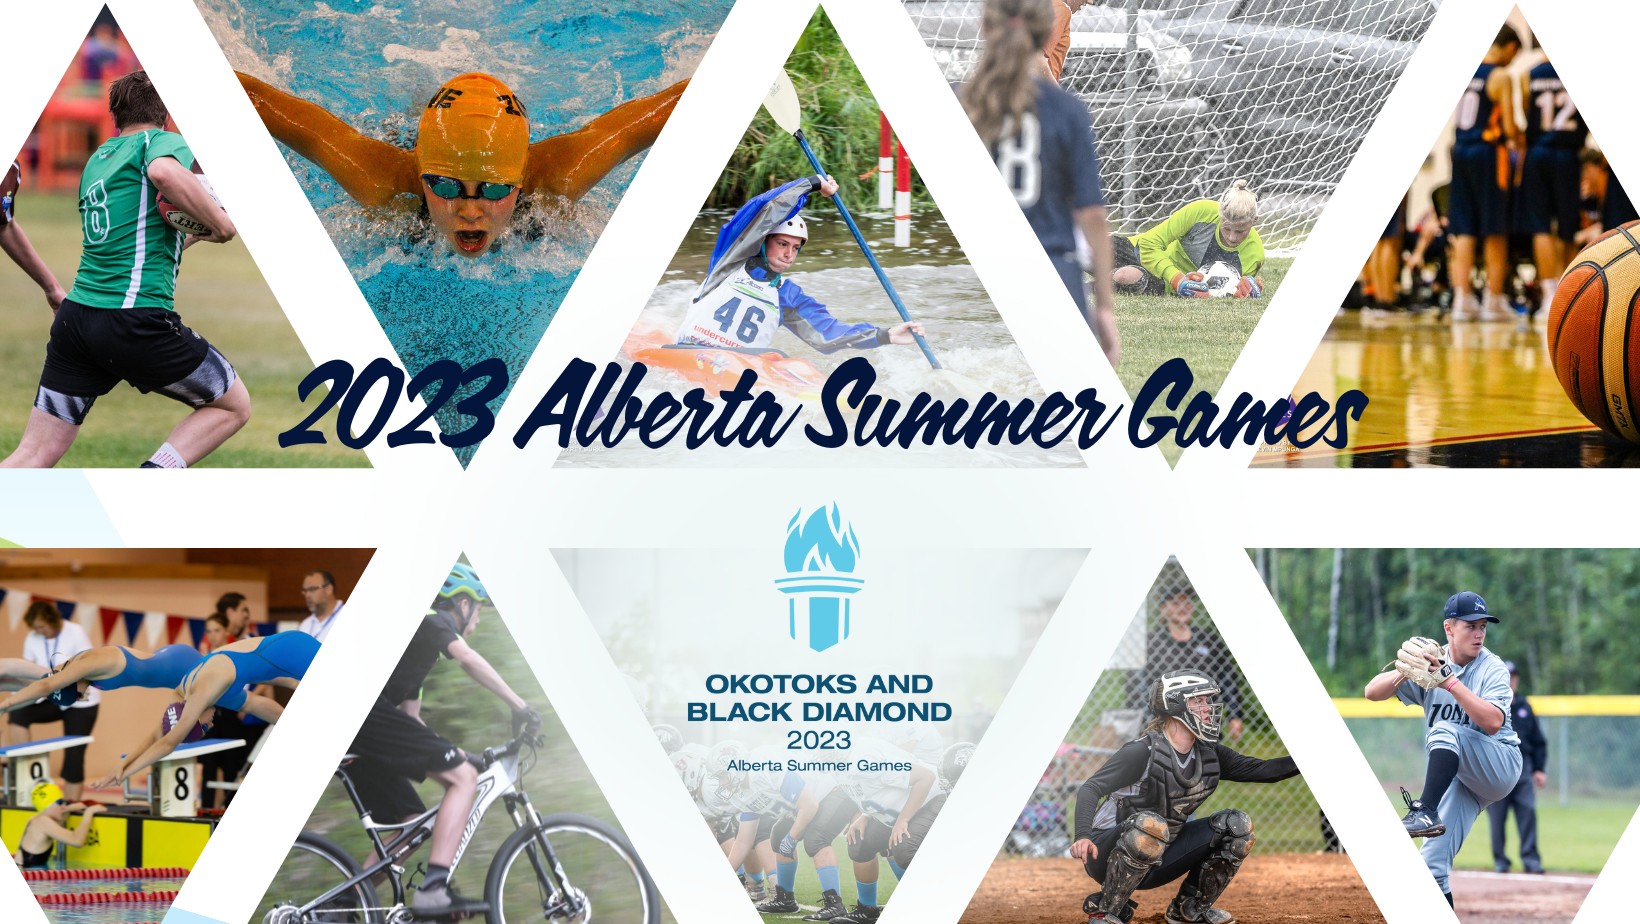 Alberta Summer Games on Where Rockies